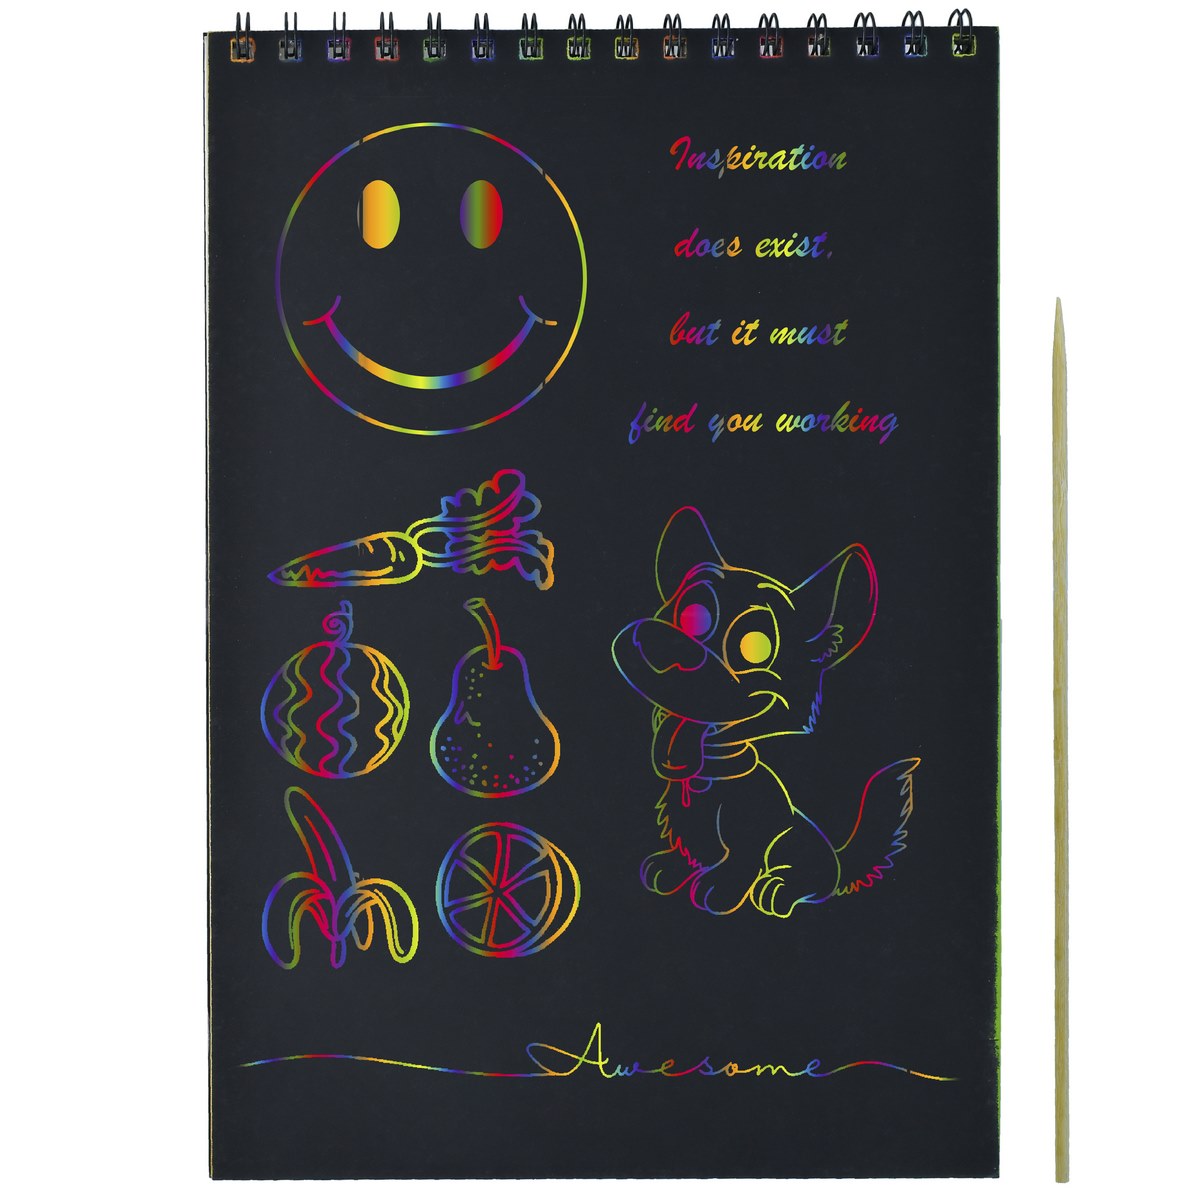 jags-mumbai Scrapbook Rainbow Scratch Art Book